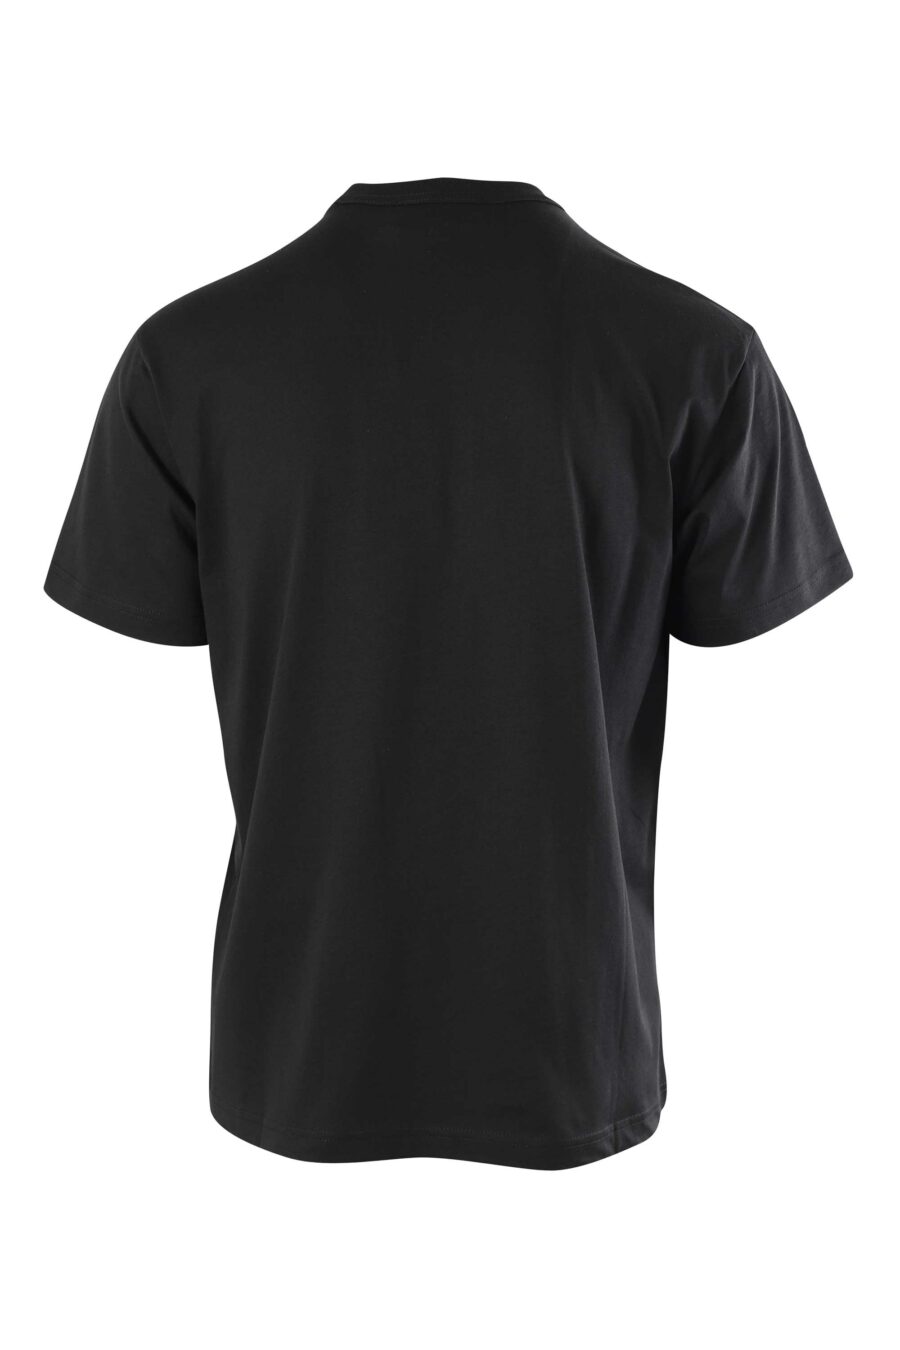 T-shirt noir avec maxilogo centré - 8052019318753 2